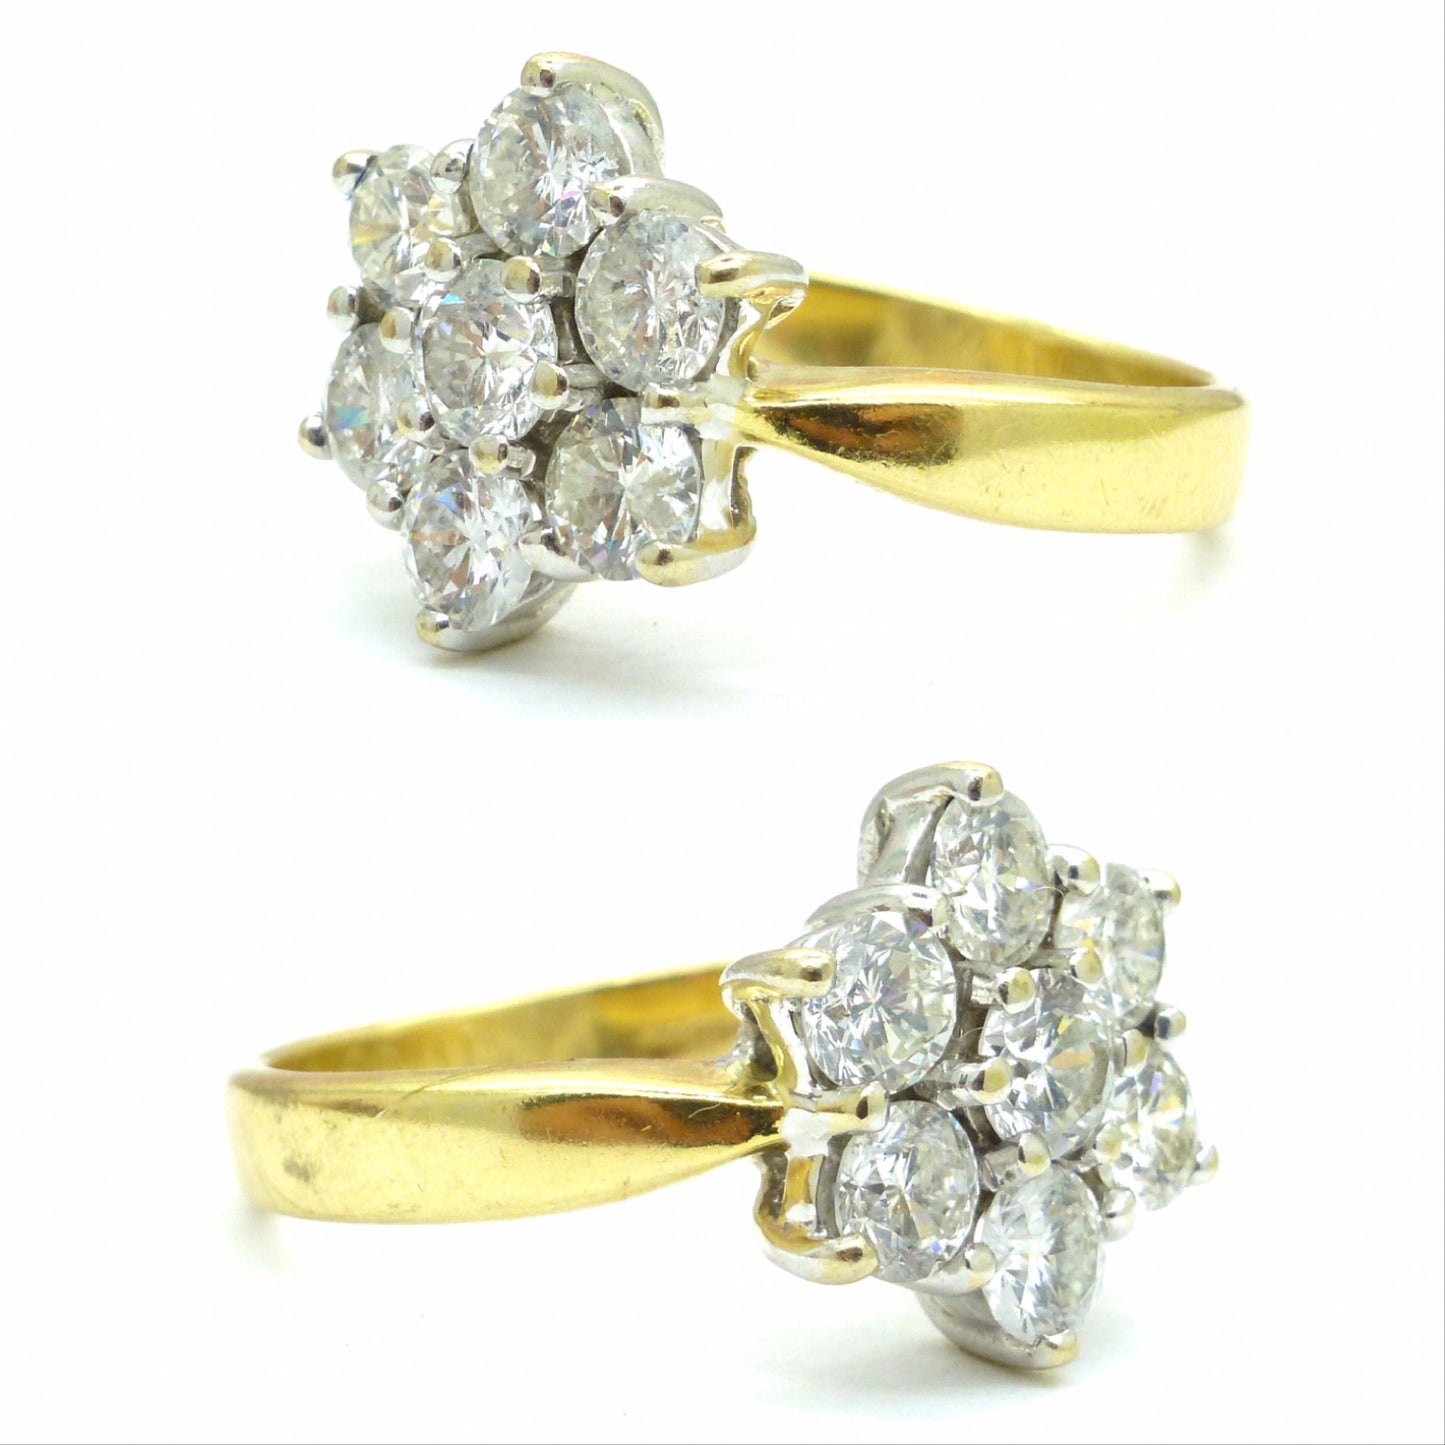 Vintage 18ct gold diamond cluster engagement ring 1.50 carat ~ Independent Valuation